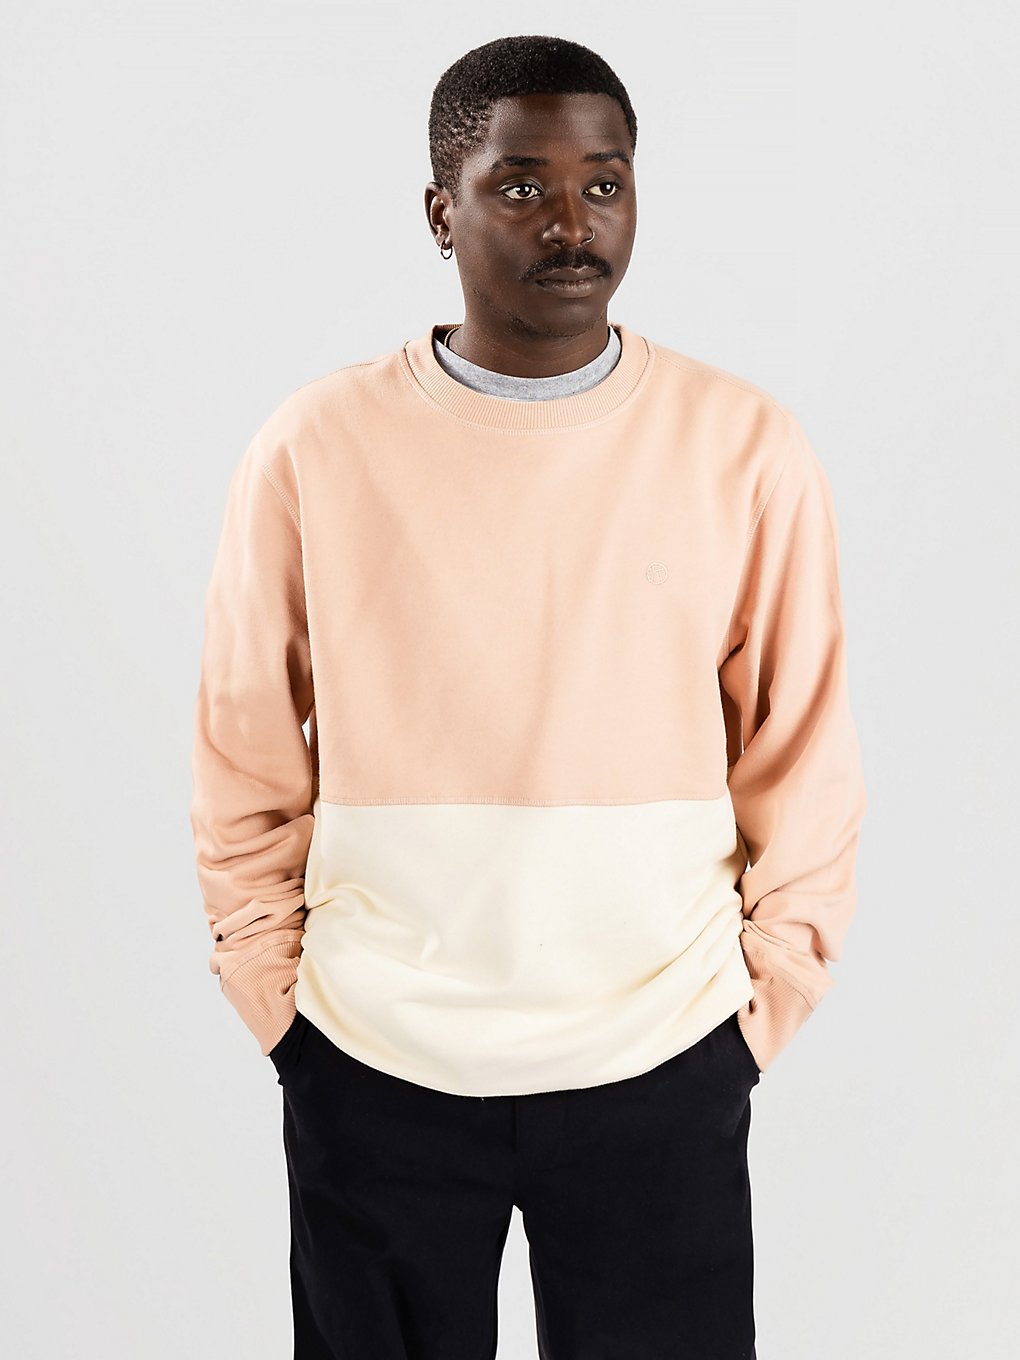 Kazane Henrik Naturals Sweater ficus 13 kaufen